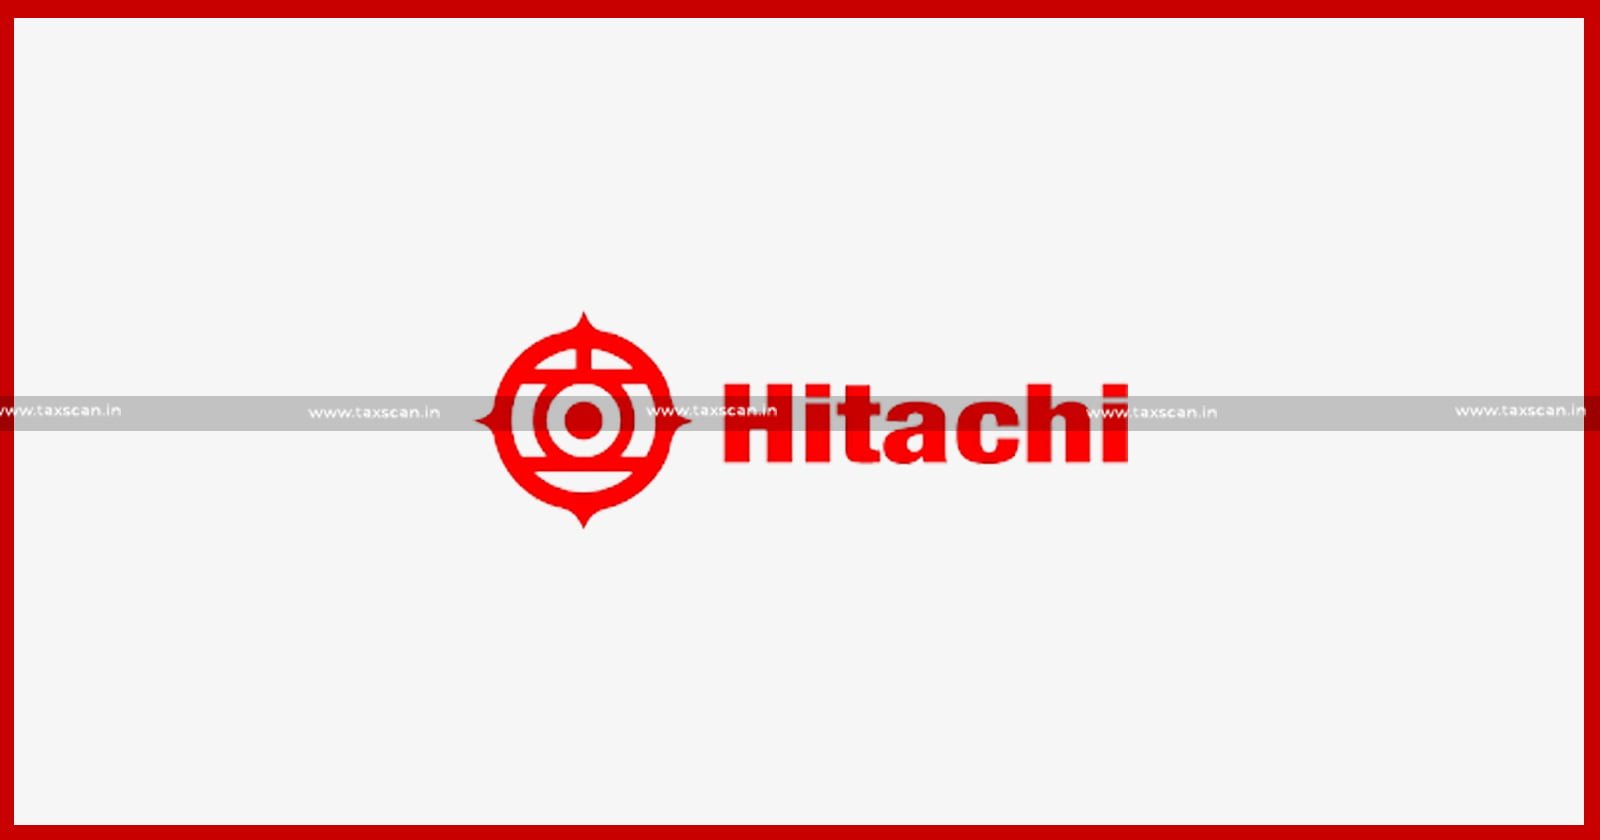 Hitachi - Hitachi Hiring - Hitachi Careers - CA Vacancy In Hitachi - CA Careers In Hitachi - Hitachi CA job vacancy - Jobscan